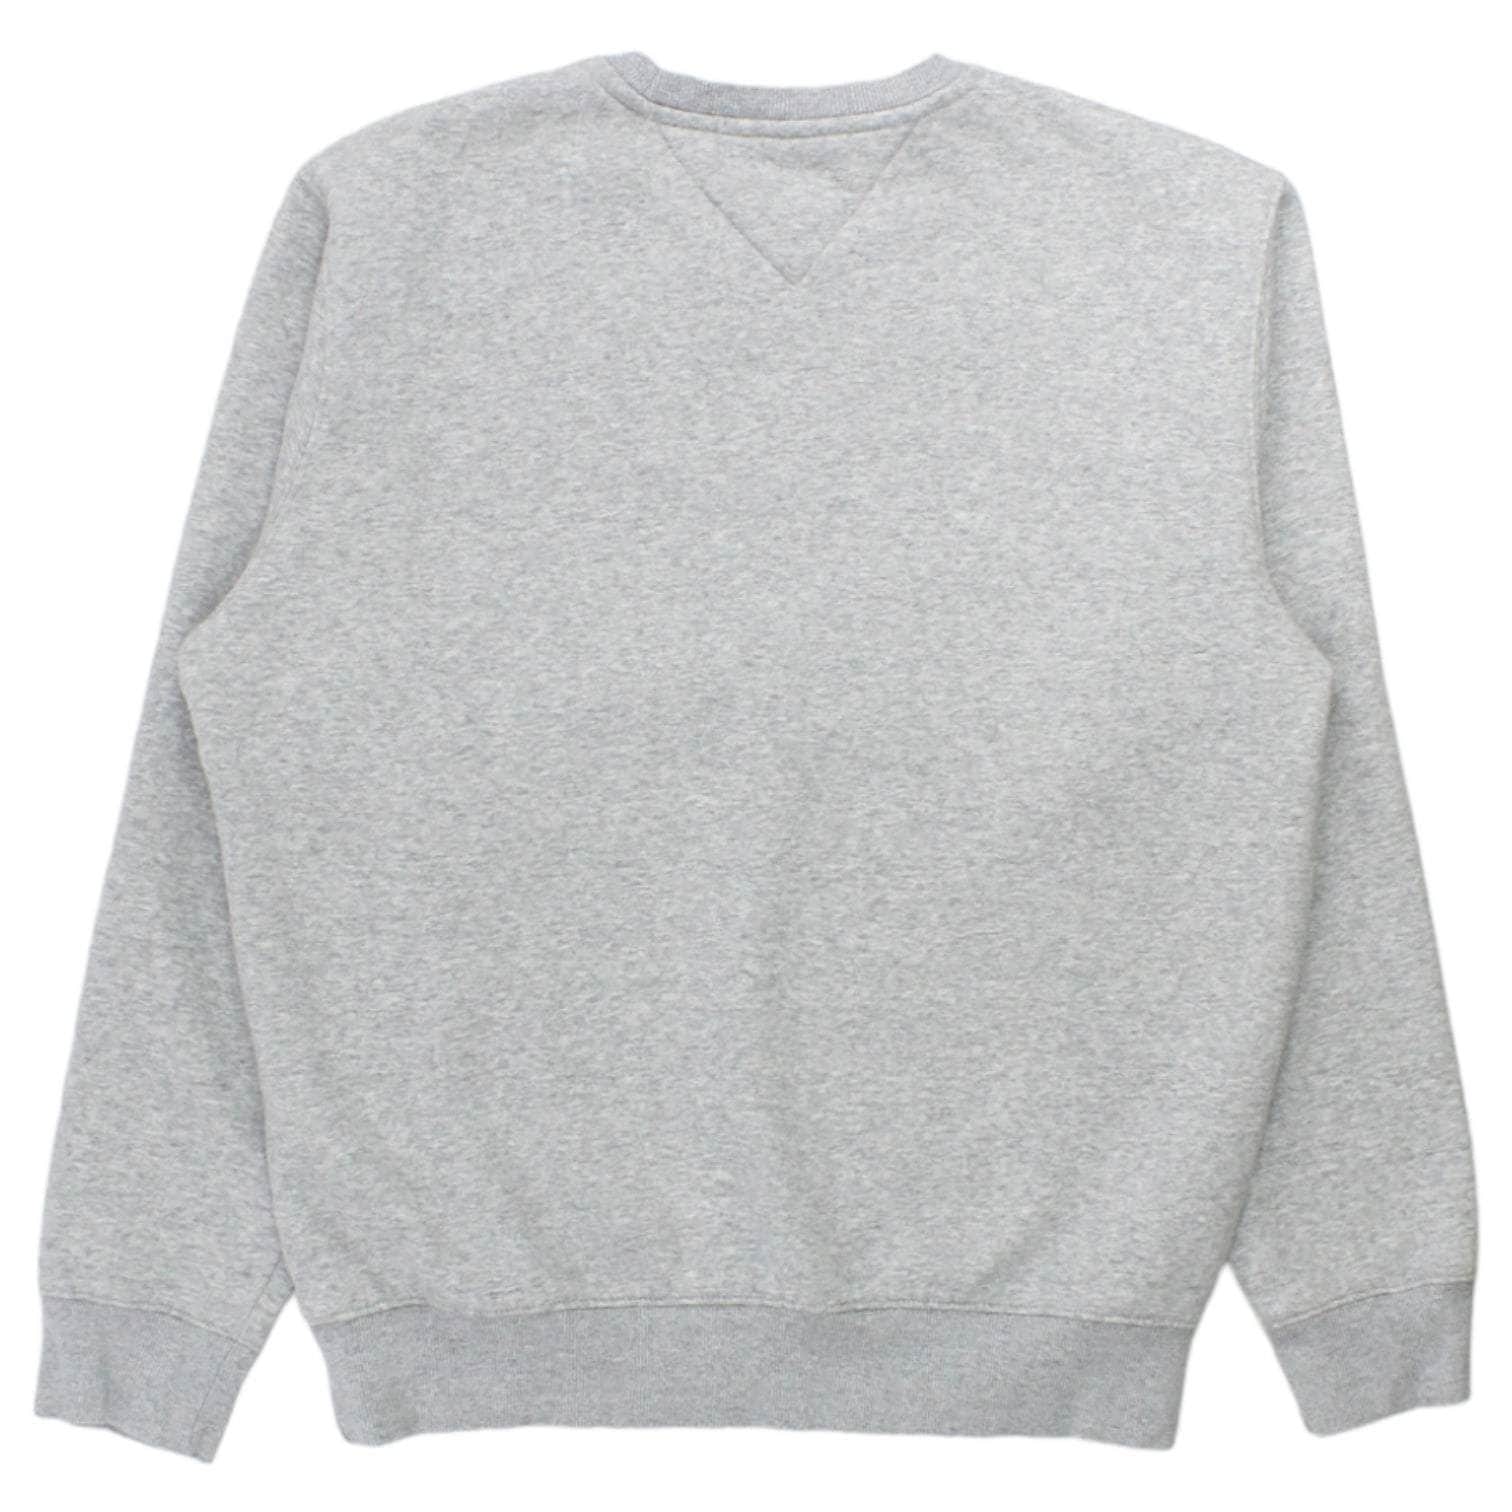 Tommy Jeans Grey Marl Sweatshirt